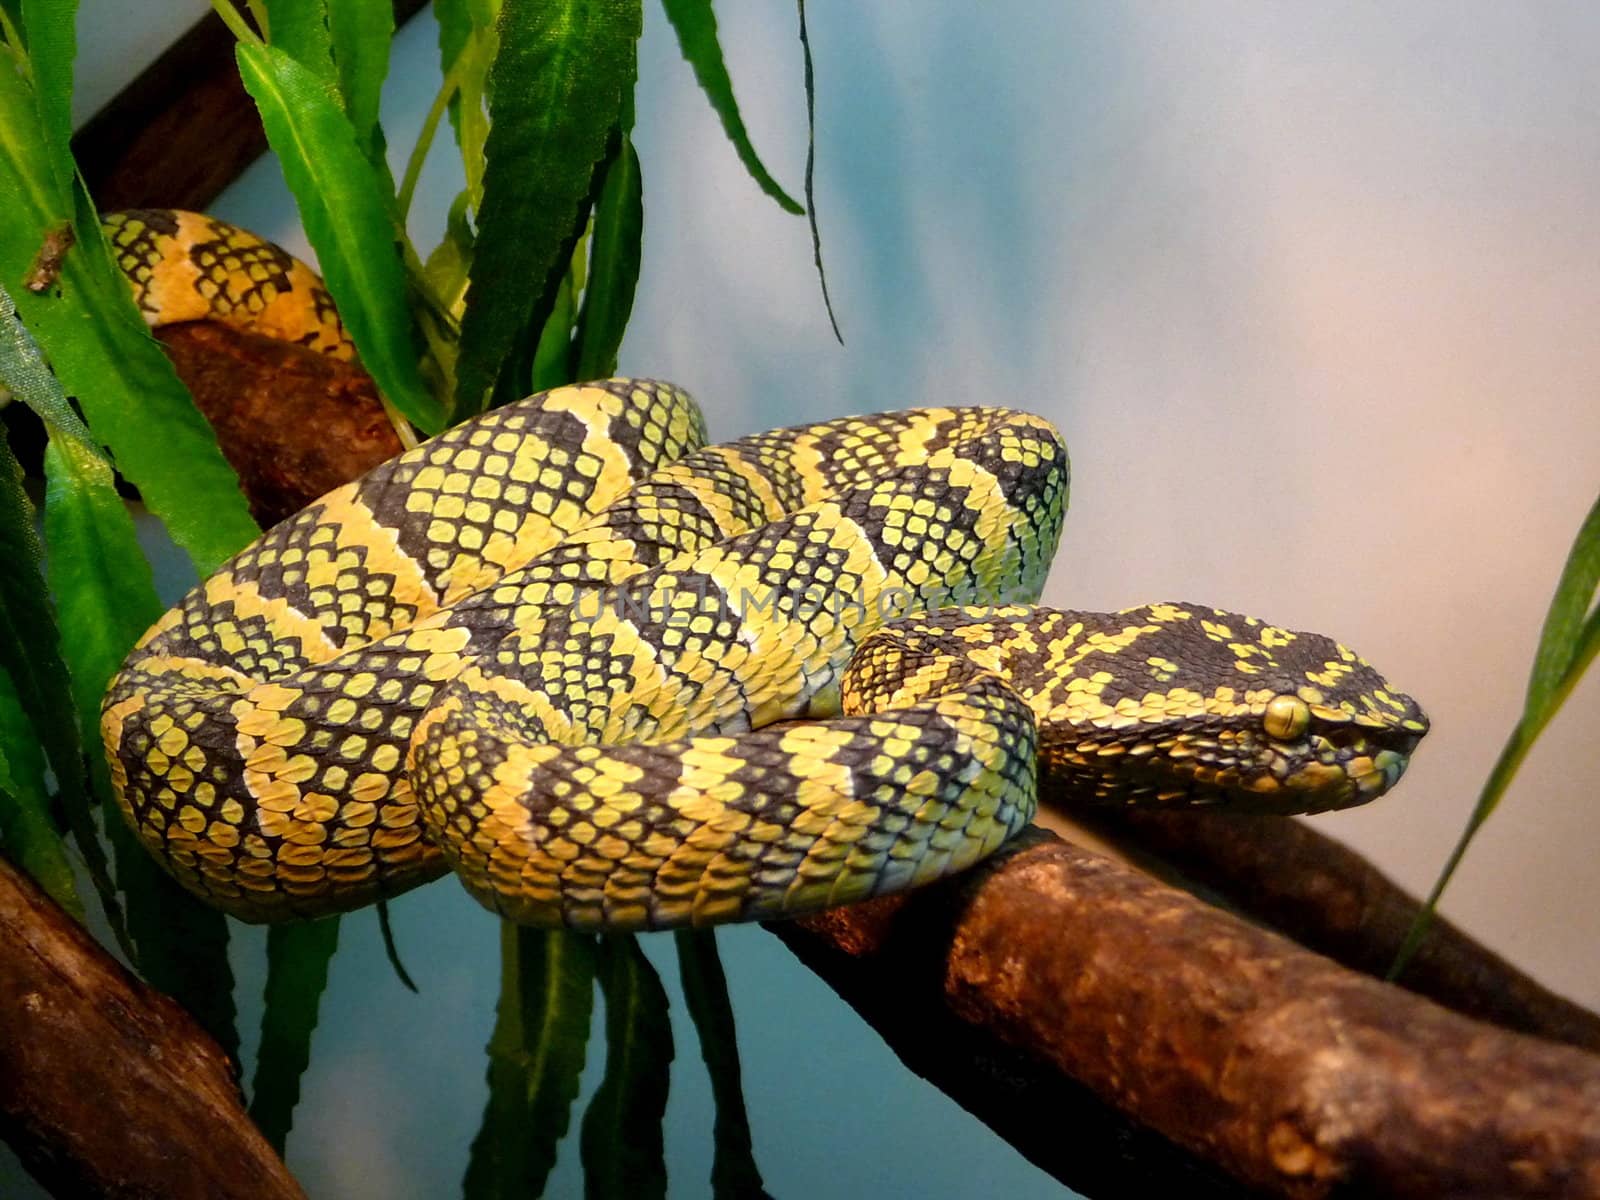 Yellow dangerous motley snake on the trunk